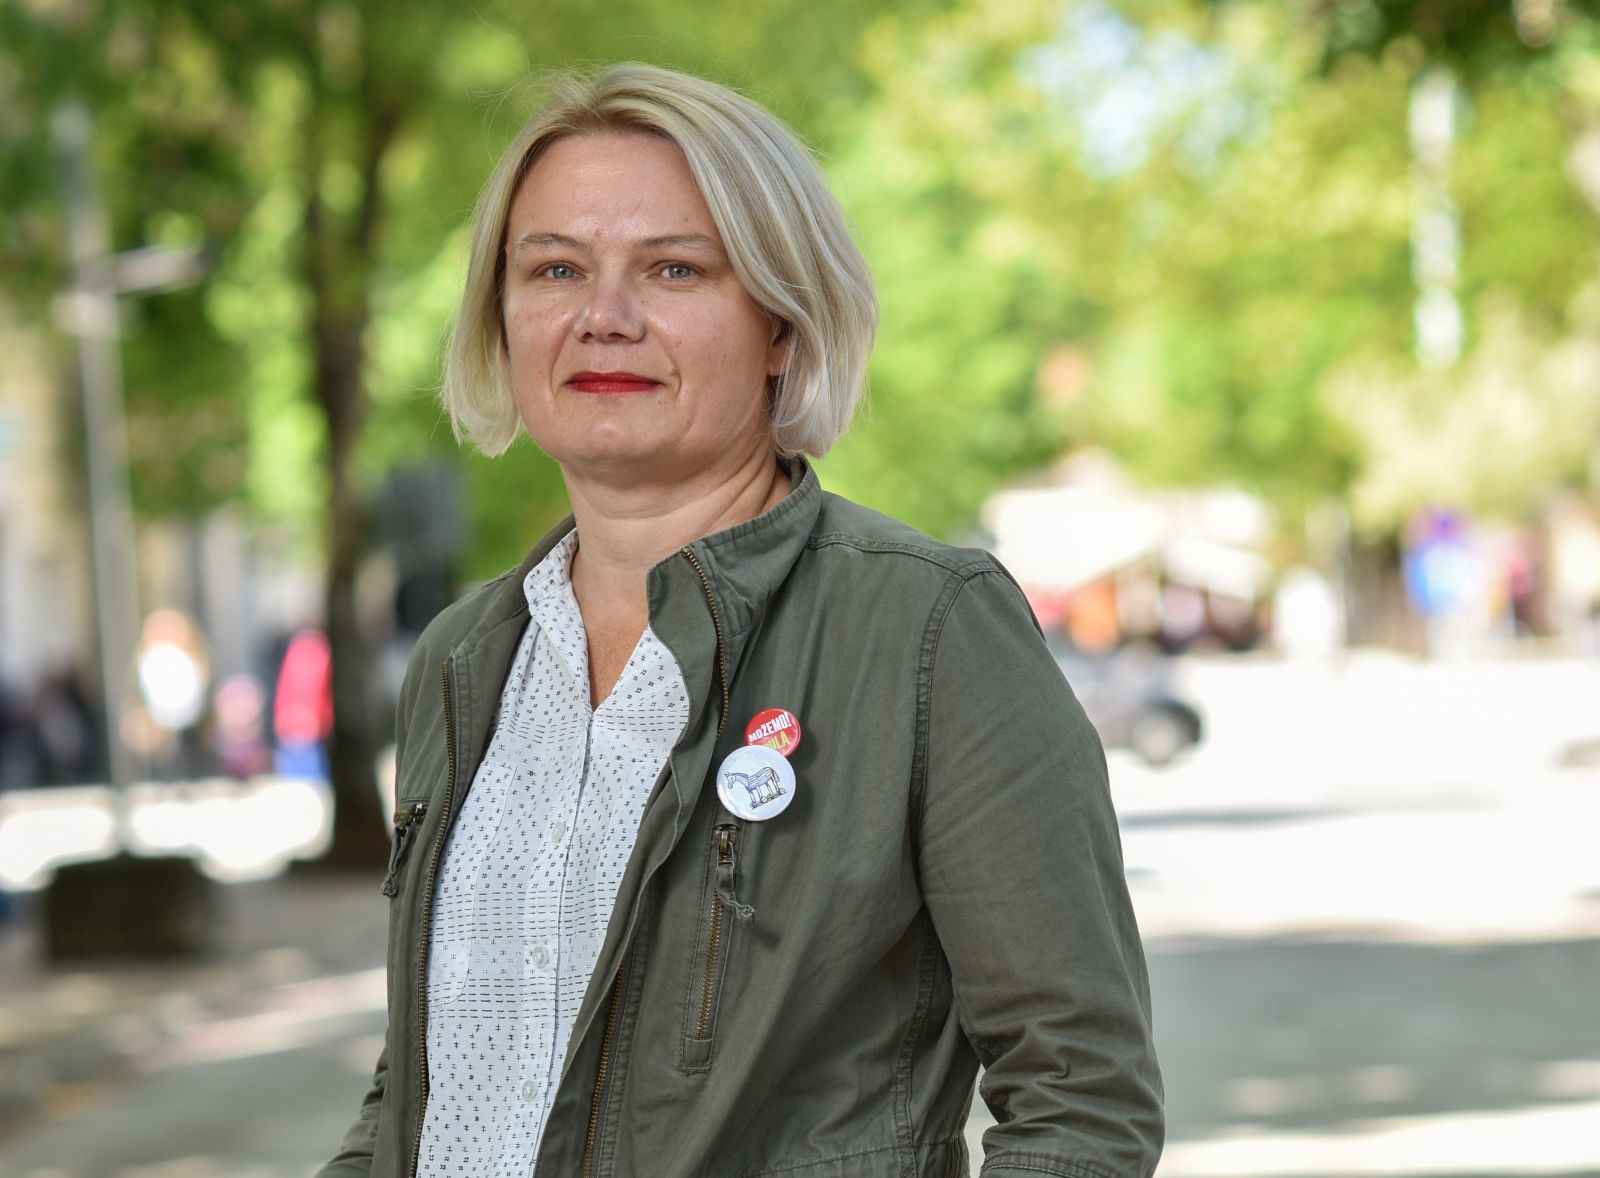 20.05.2021., Pazin - Suzana Jasic, kandidatkinja platforme Mozemo! za gradonacelnicu Pazina. 

Photo Sasa ZinajaNFoto